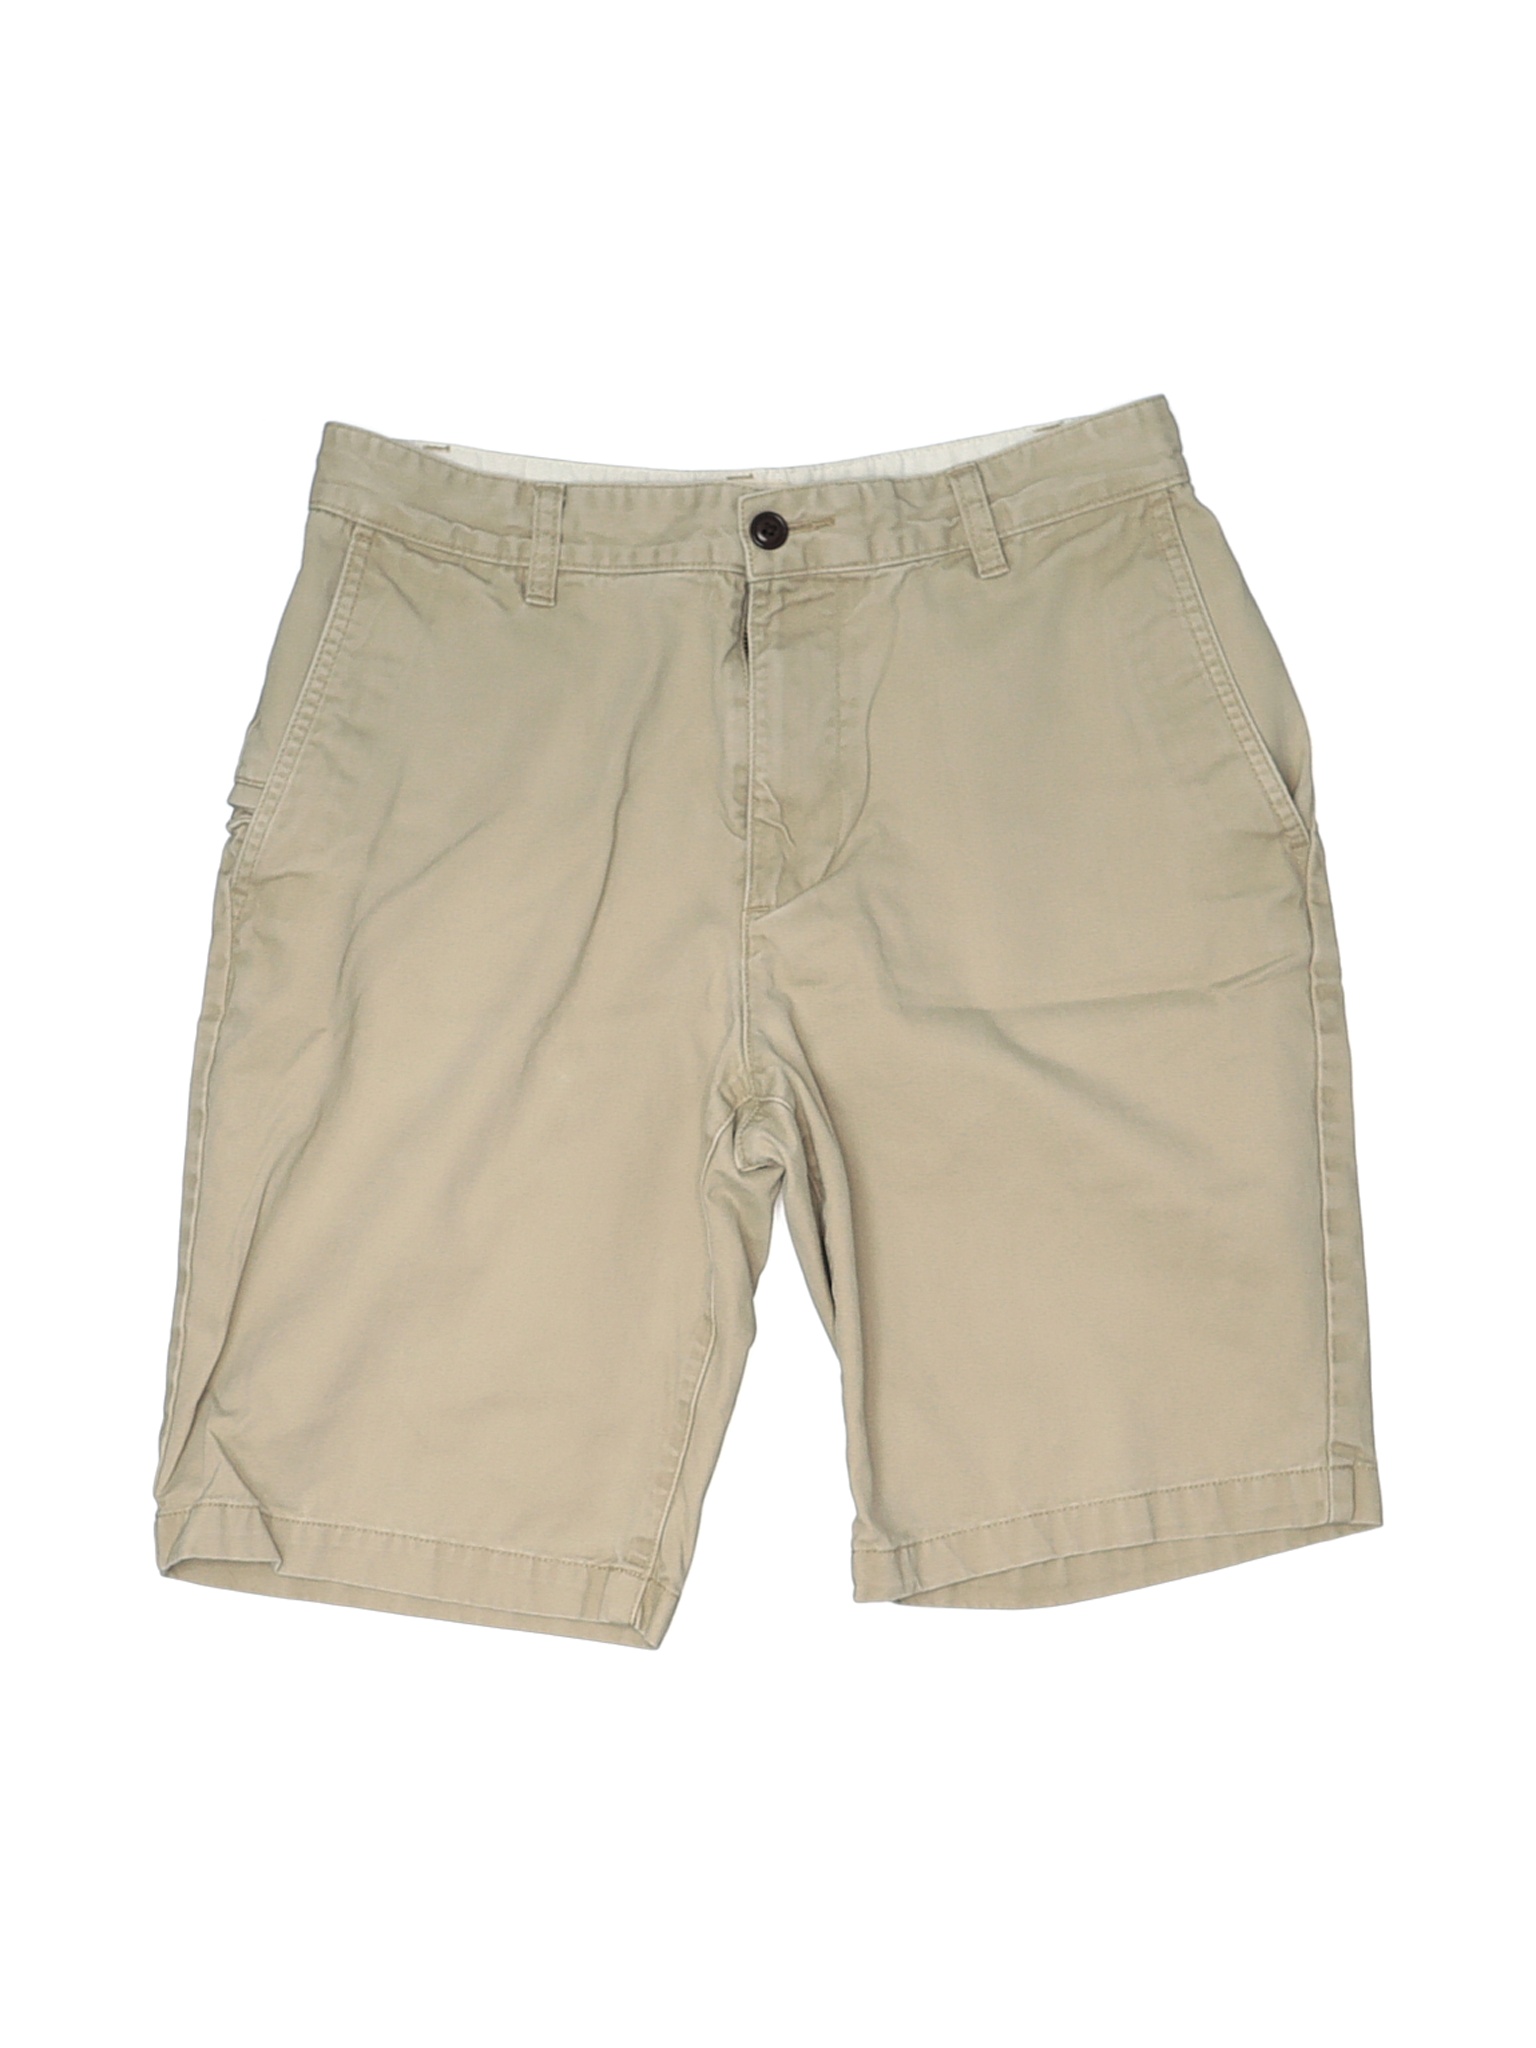 Kinder Girls Dockers $28 Uniform/Casual Khaki Knee Length Shorts Size ...